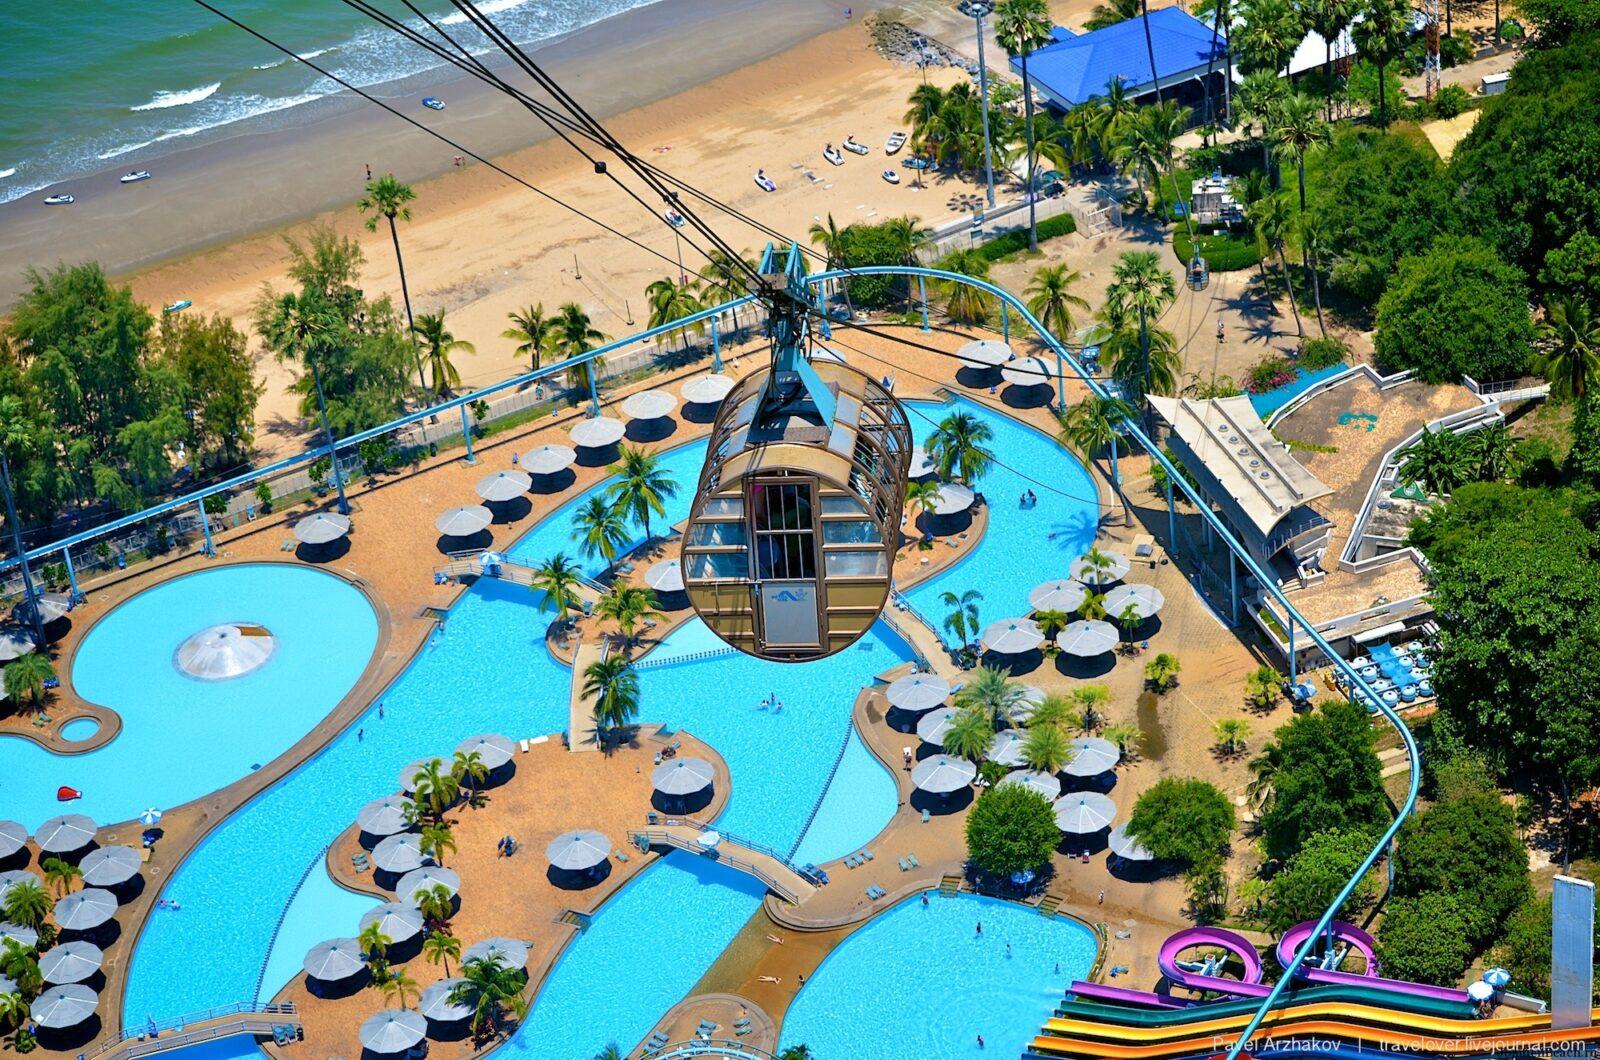 Отель Паттайя Парк Бич Резорт 3* (Pattaya Park Beach Resort 3*)